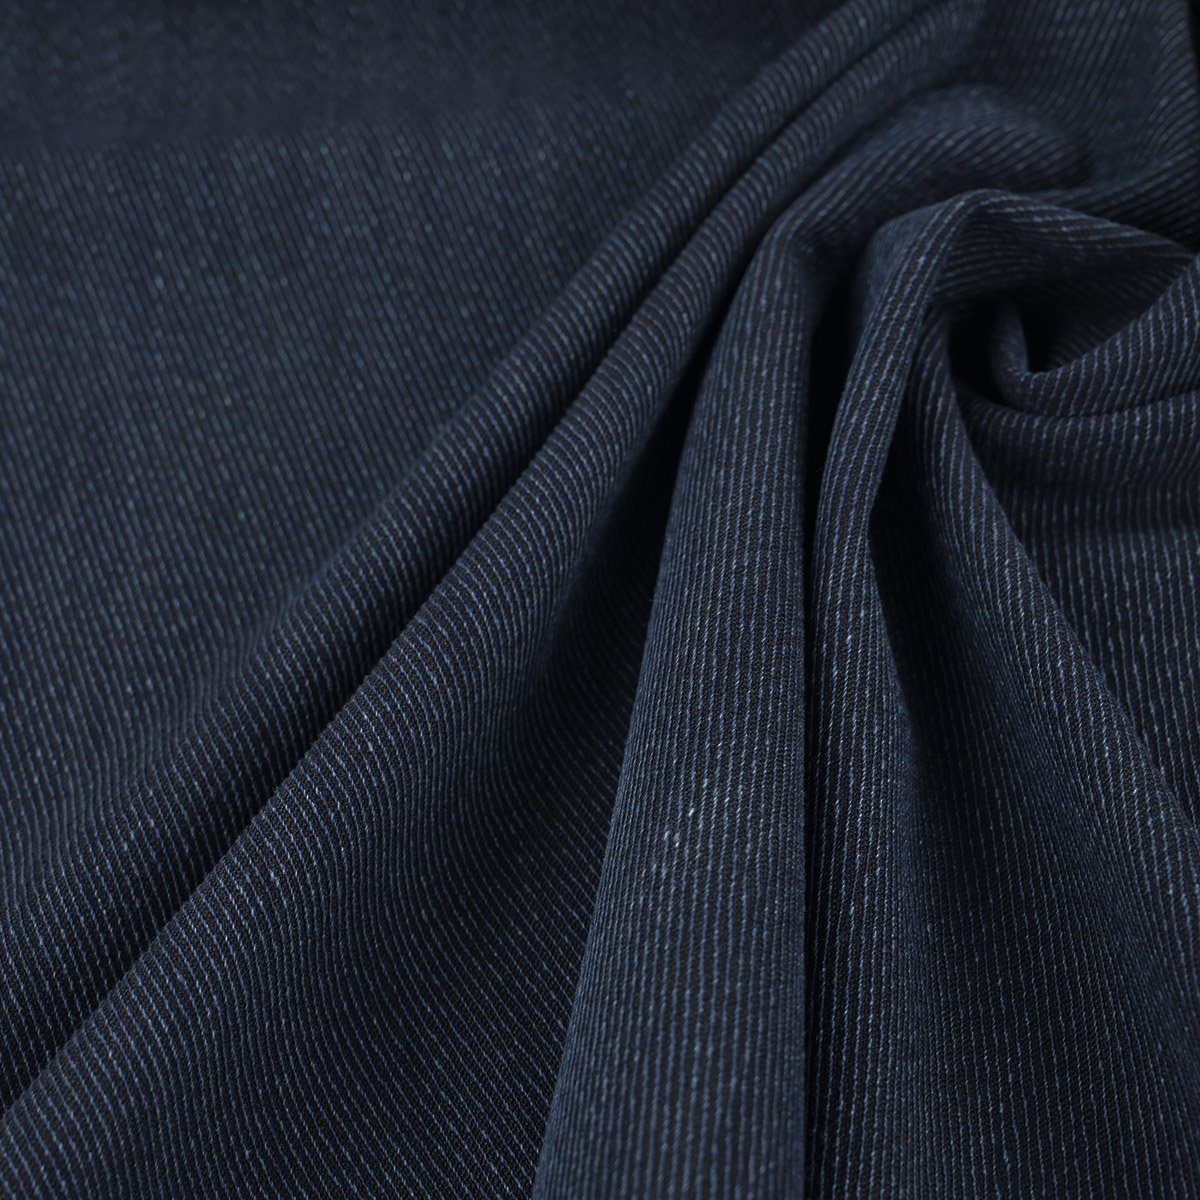 Indigo Blue Heavy Cotton Fabric 709